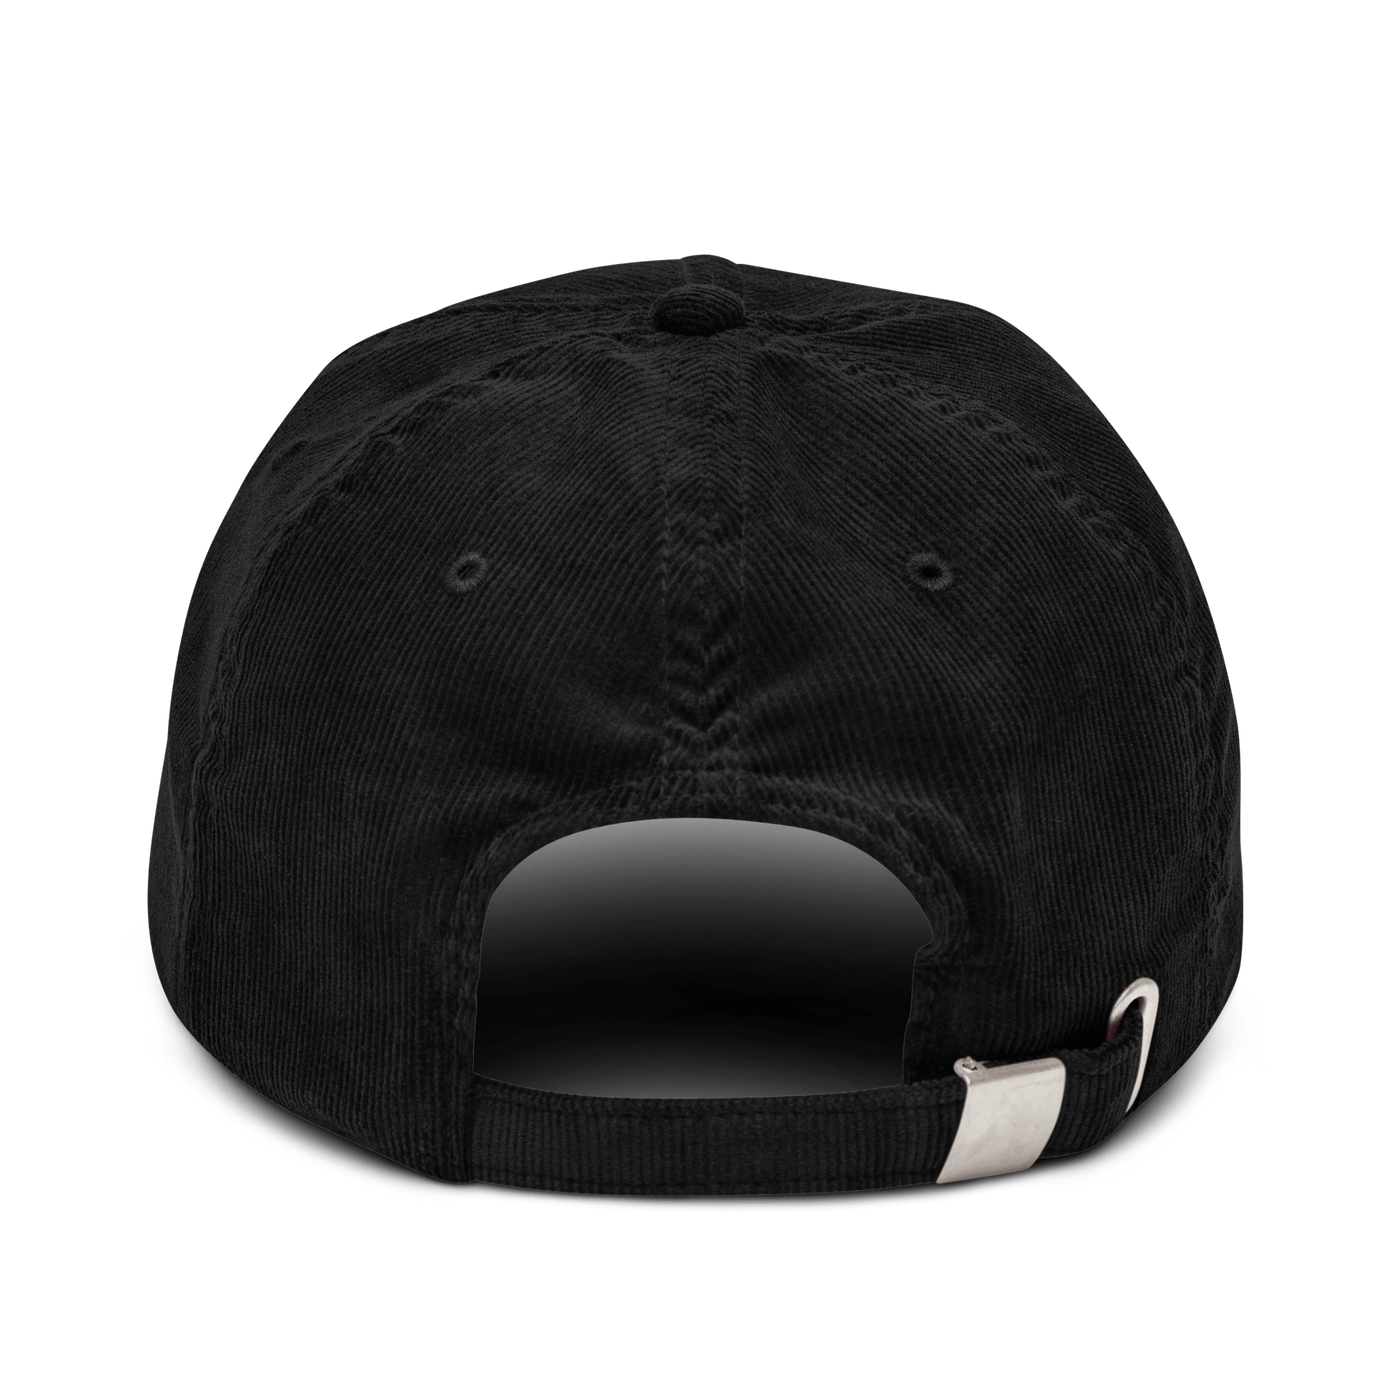 Vegan Corduroy hat - Black - - Just Another Cap Store